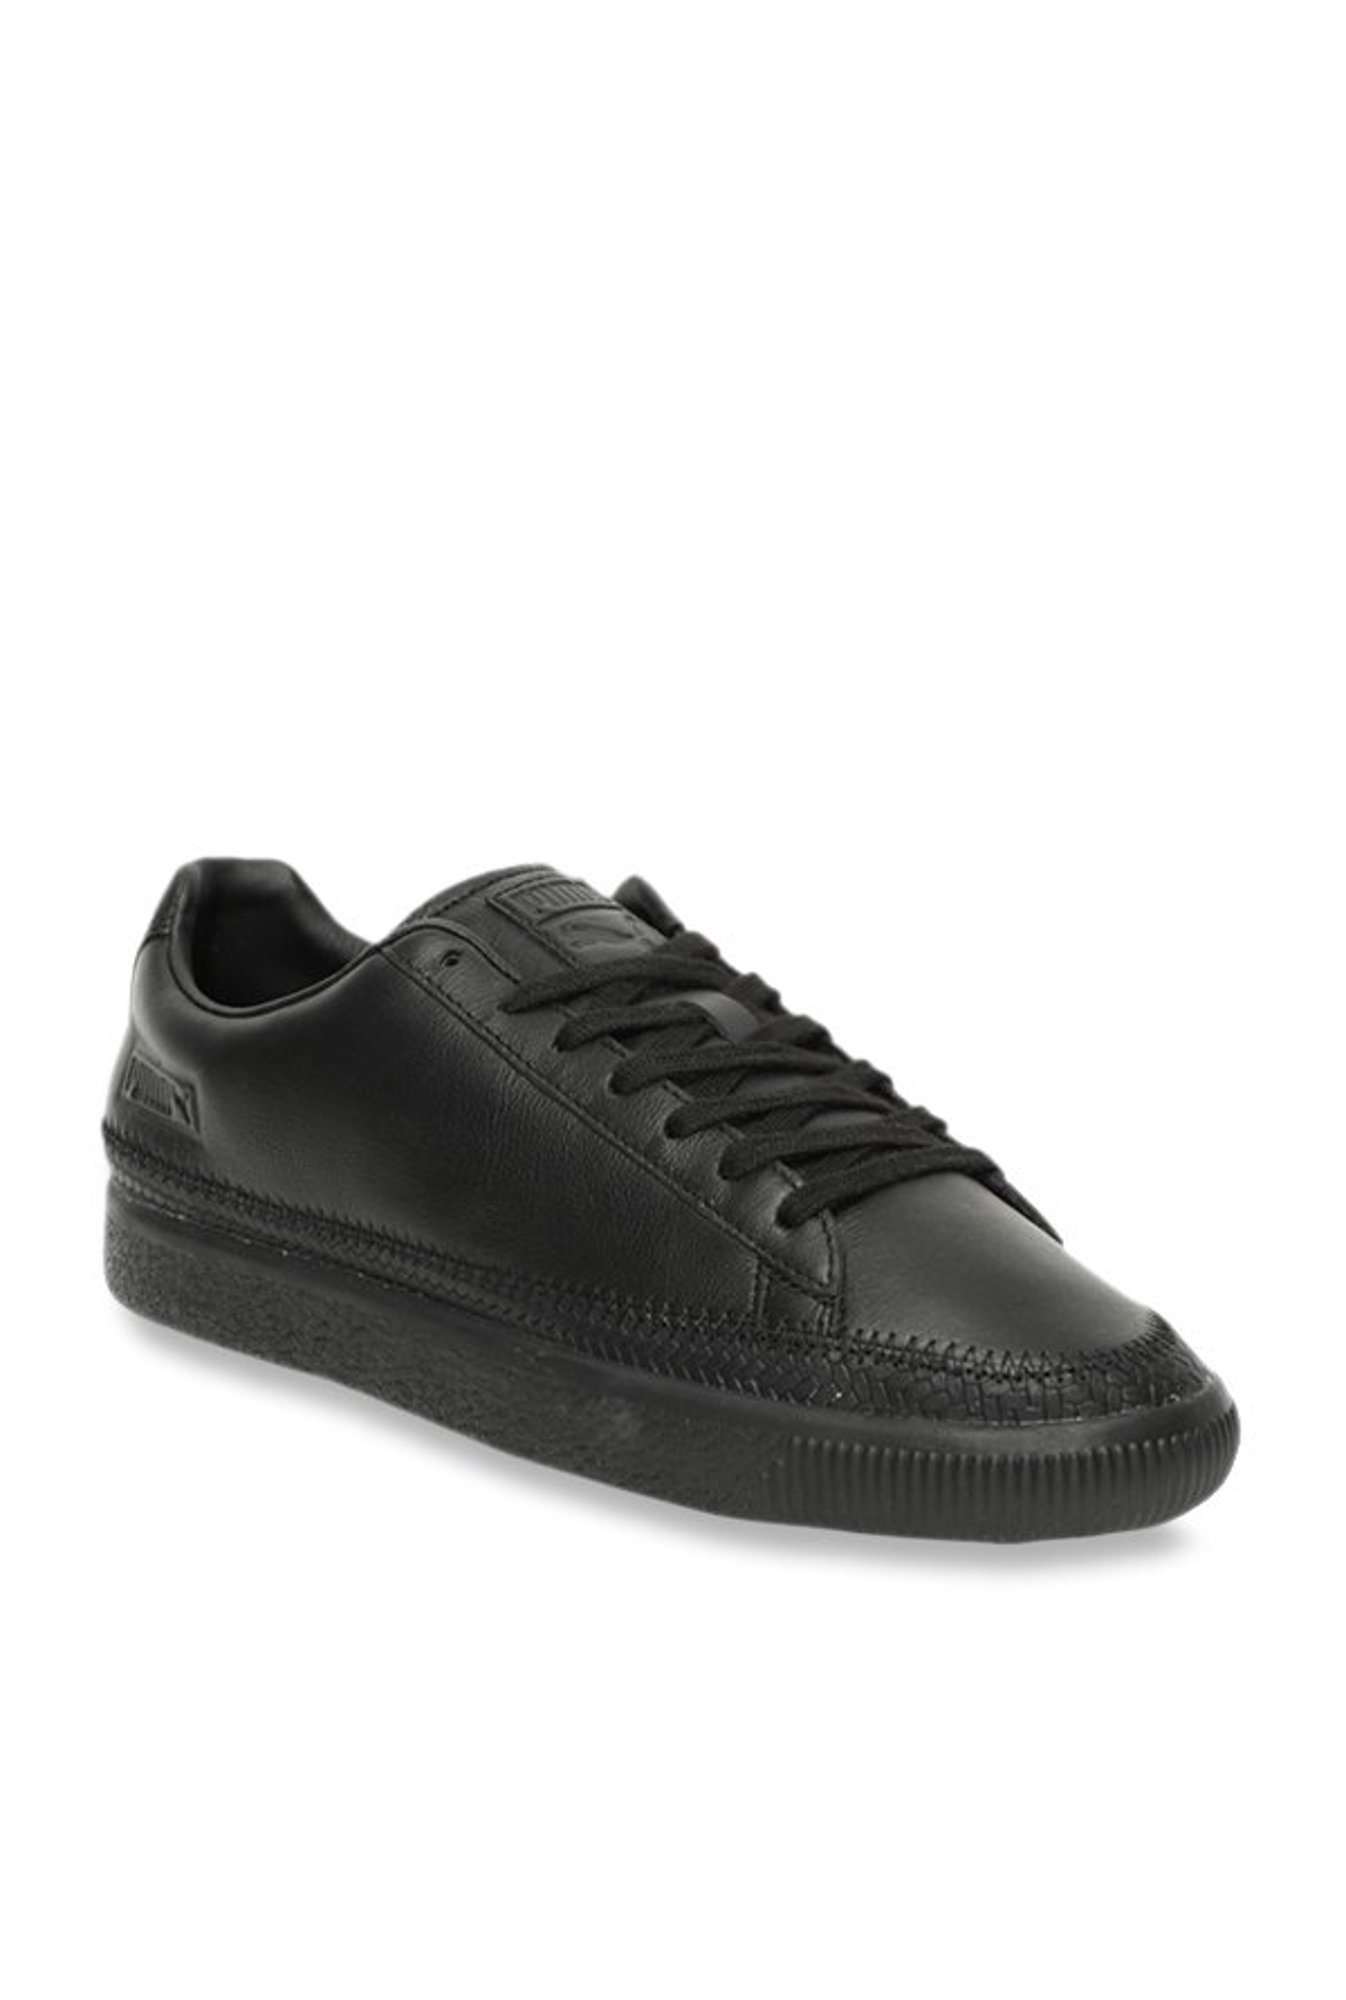 Buy Puma Mens Basket Classic LFS White-Black Sneaker - 3 UK (35436722) at  Amazon.in